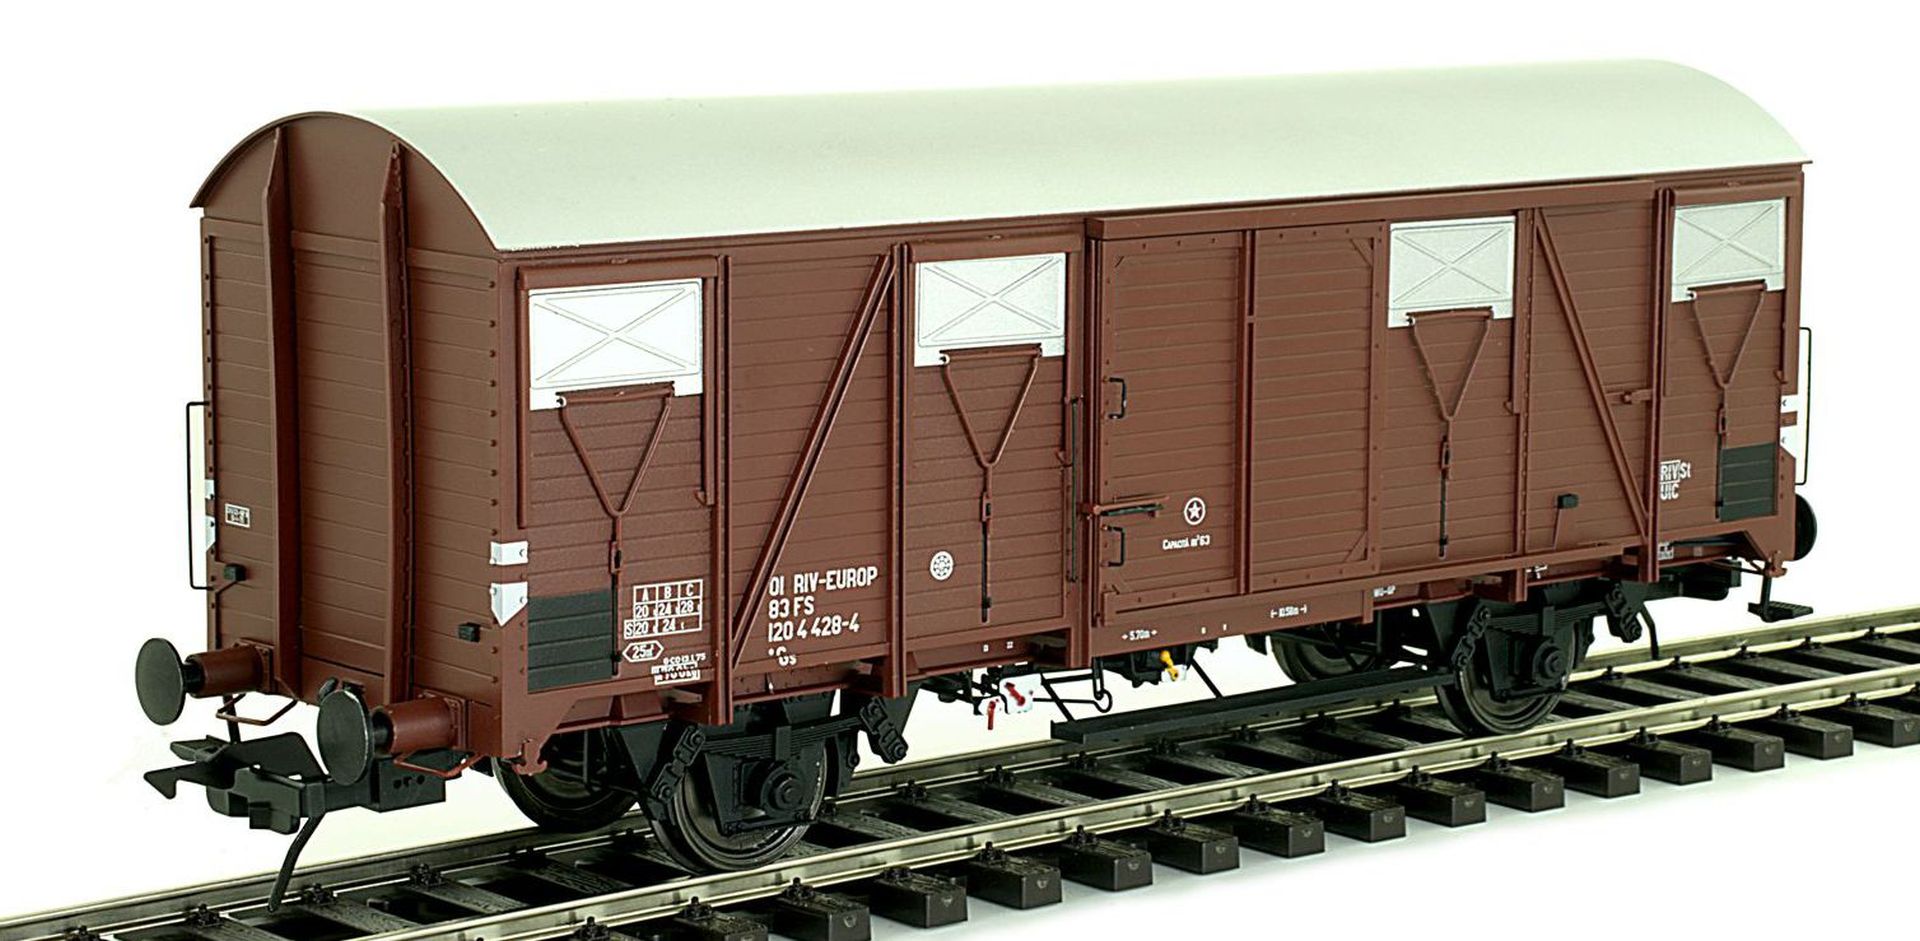 Lenz 42246-08 - Güterwagen K4, FS, Ep.IV, 120 4 428-4